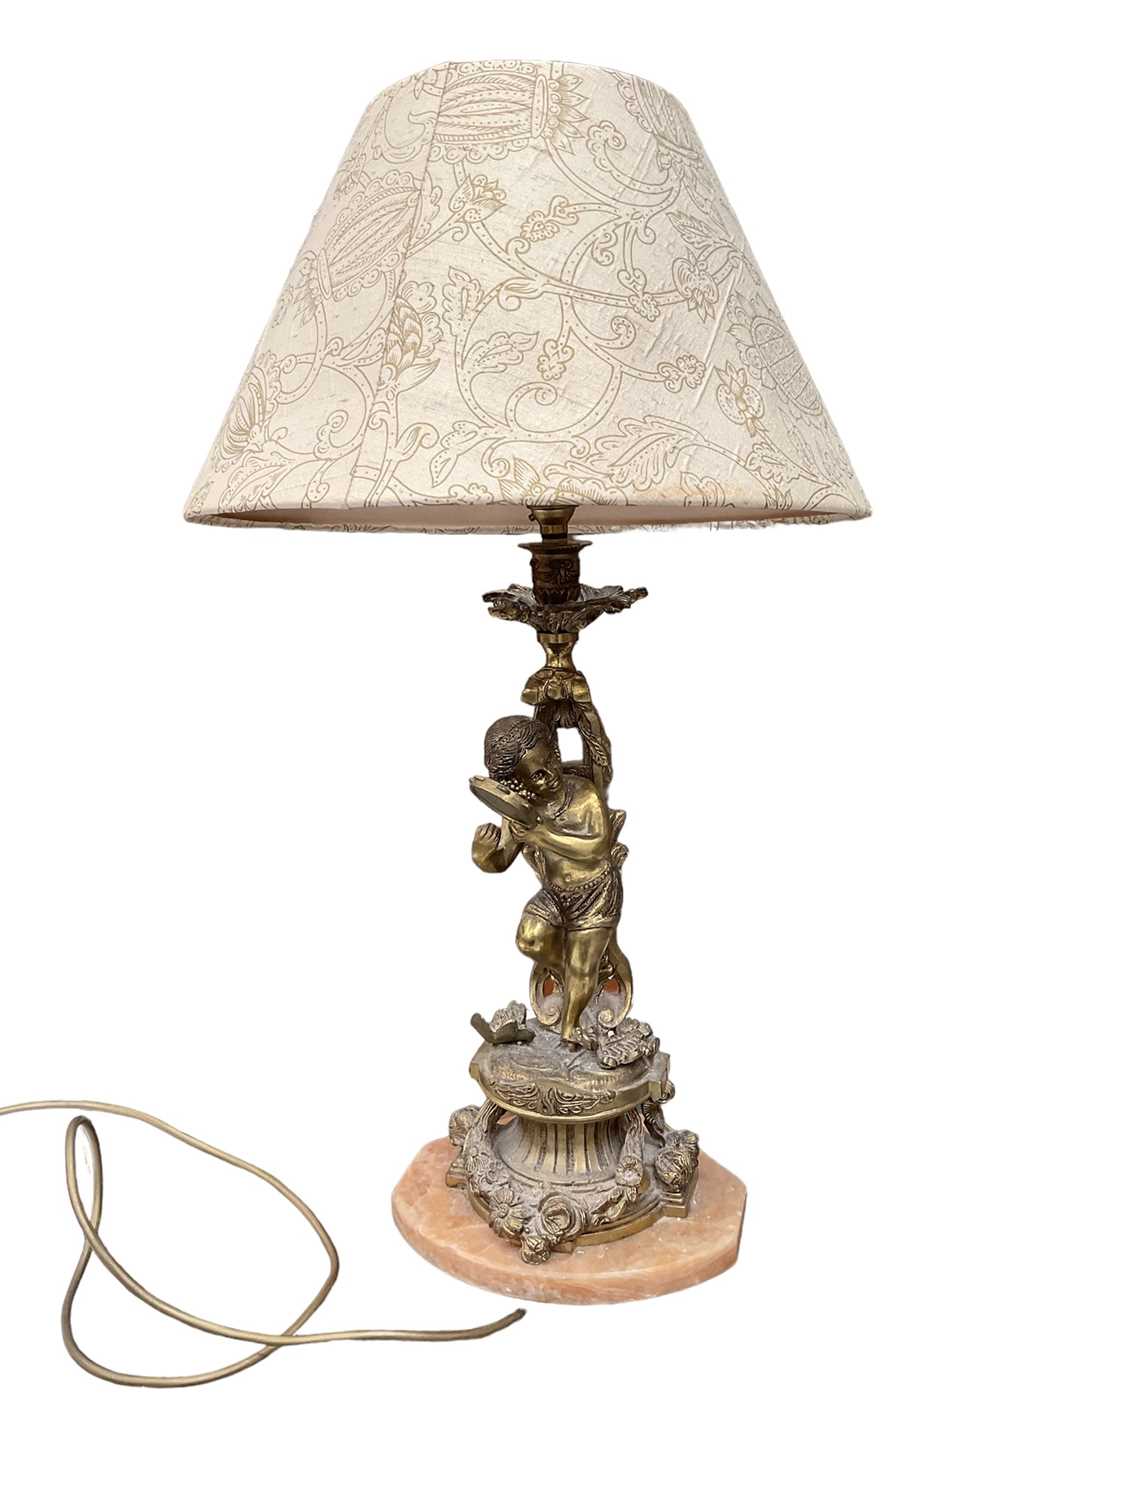 Ormolu style cherub lamp with shade, total height 63cm